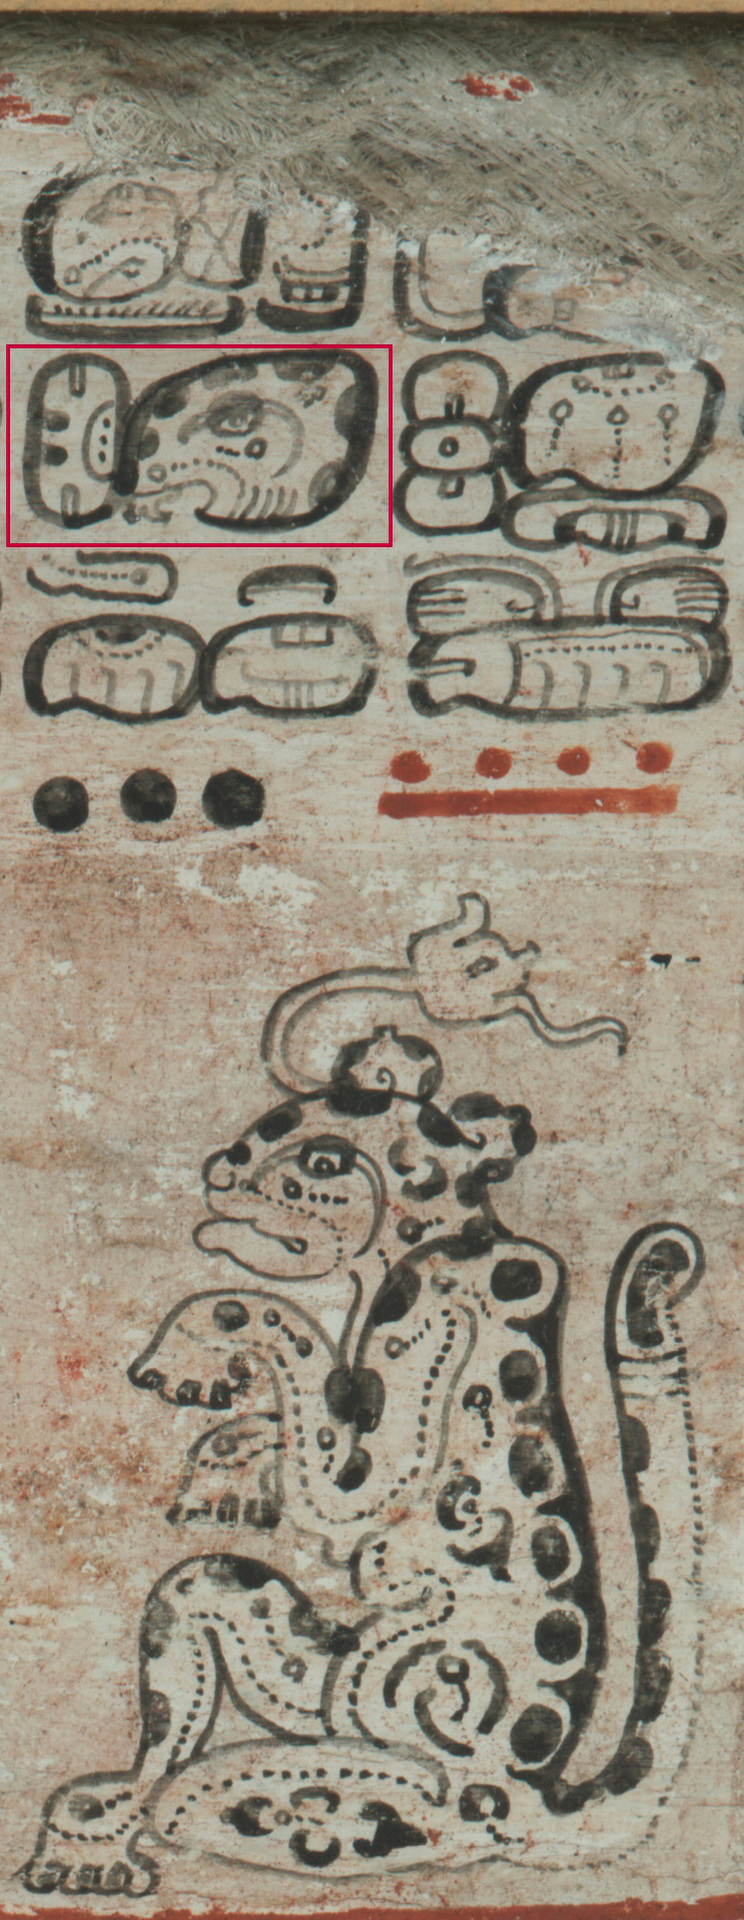 Codex Dresdensis: Jaguargott